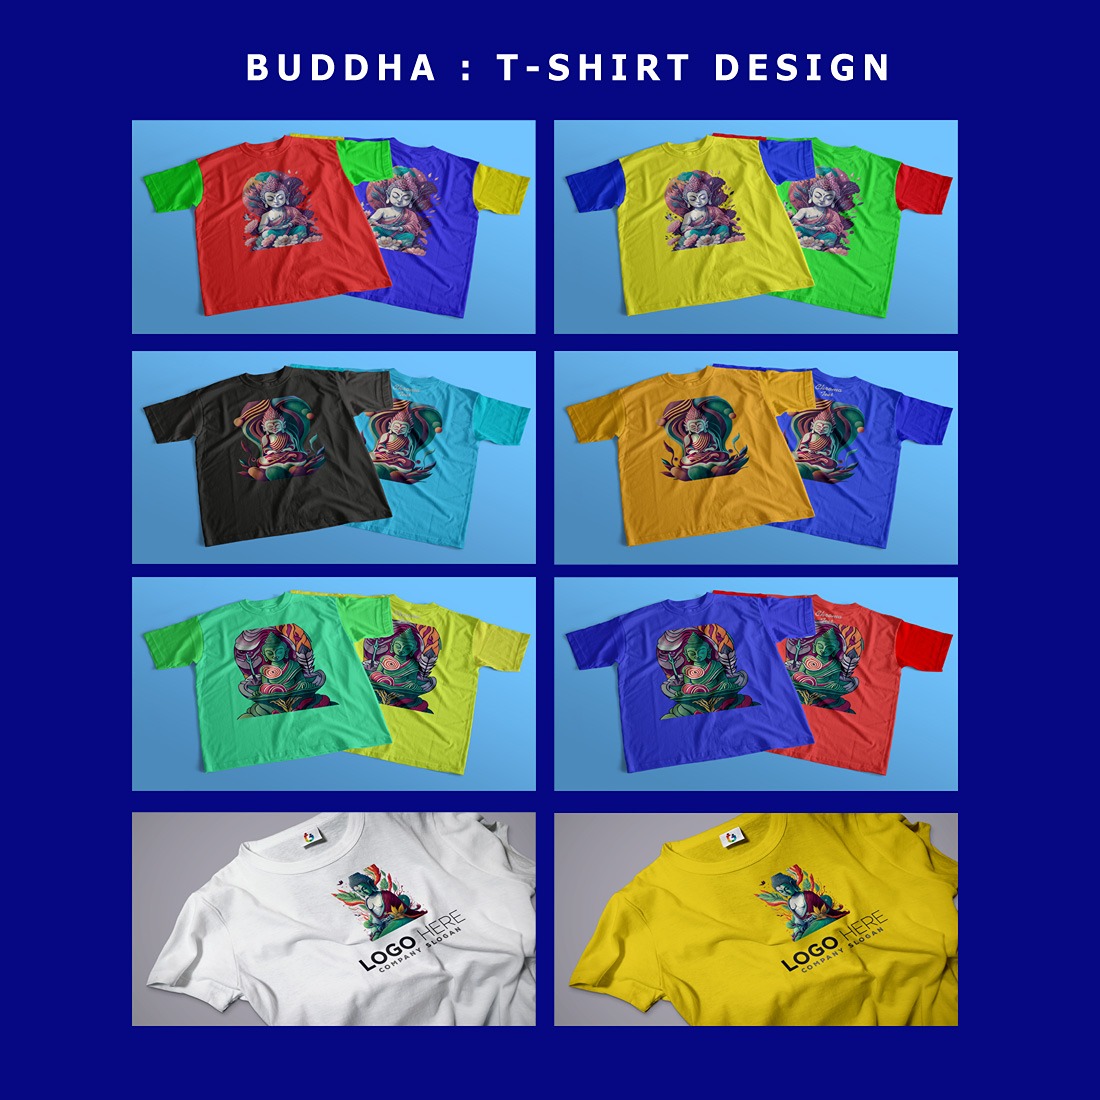 Buddha - T-shirt Design Template, buddha t-shirt, buddha half t-shirt, buddha logo t-shirt, buddha man or woman t-shirt preview image.